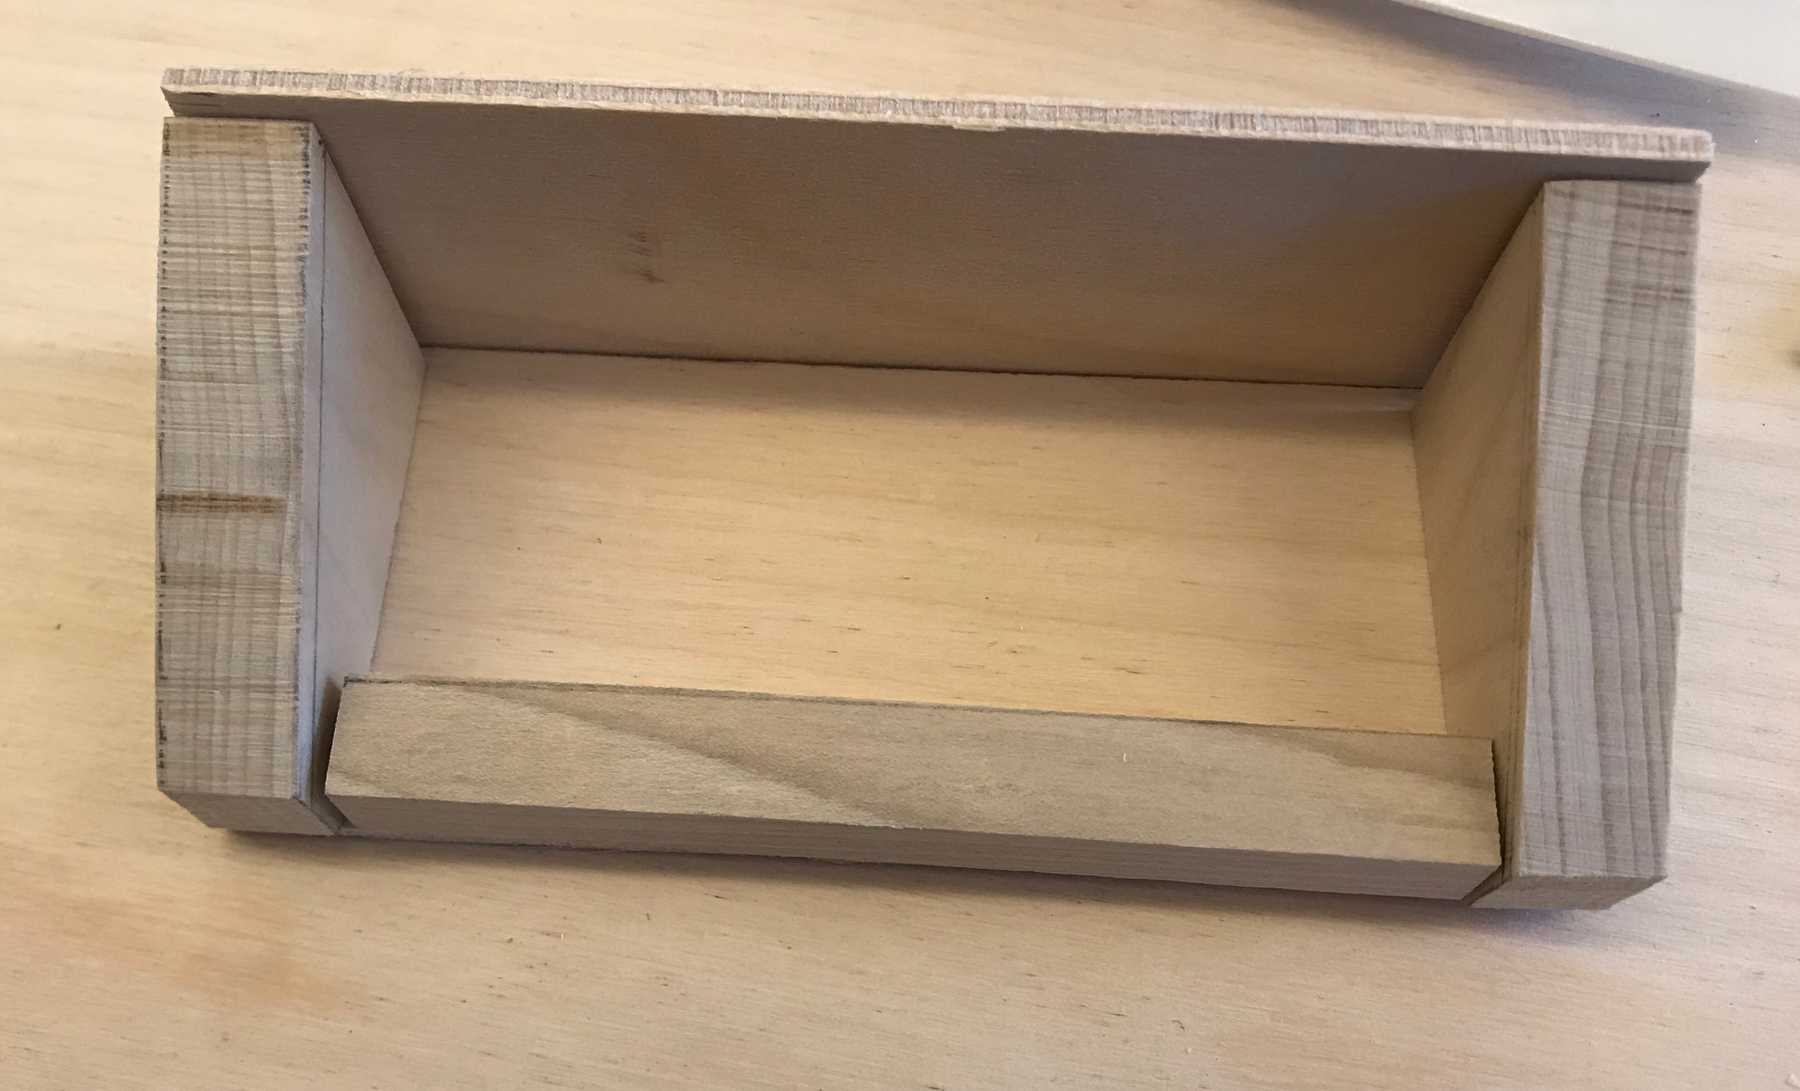 Assembling the box